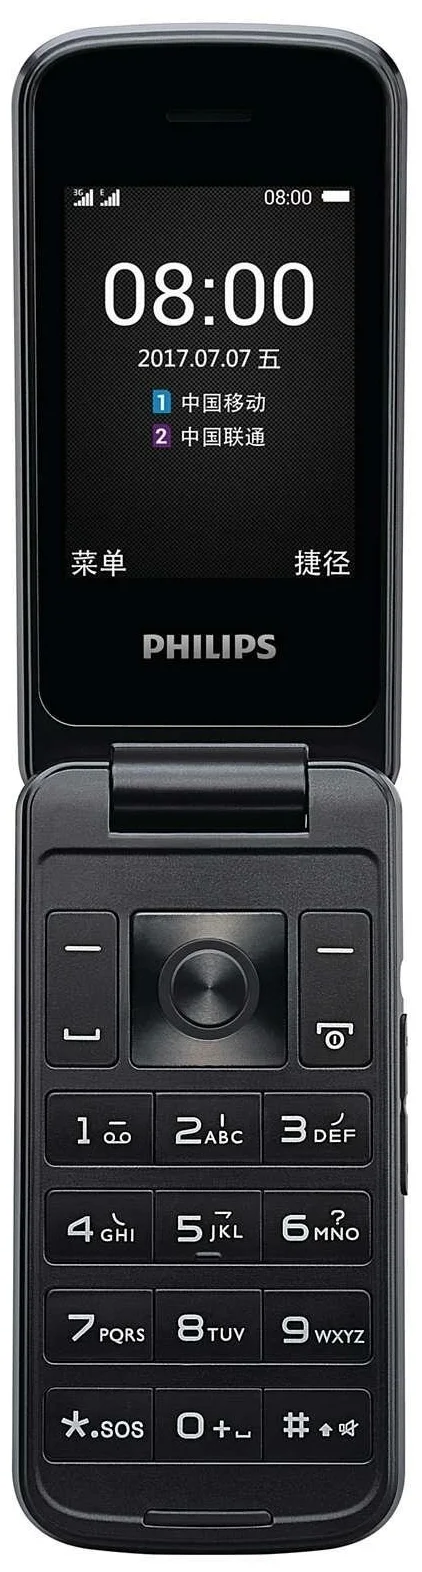 Philips Xenium E255 - экран: 2.4" (320×240)